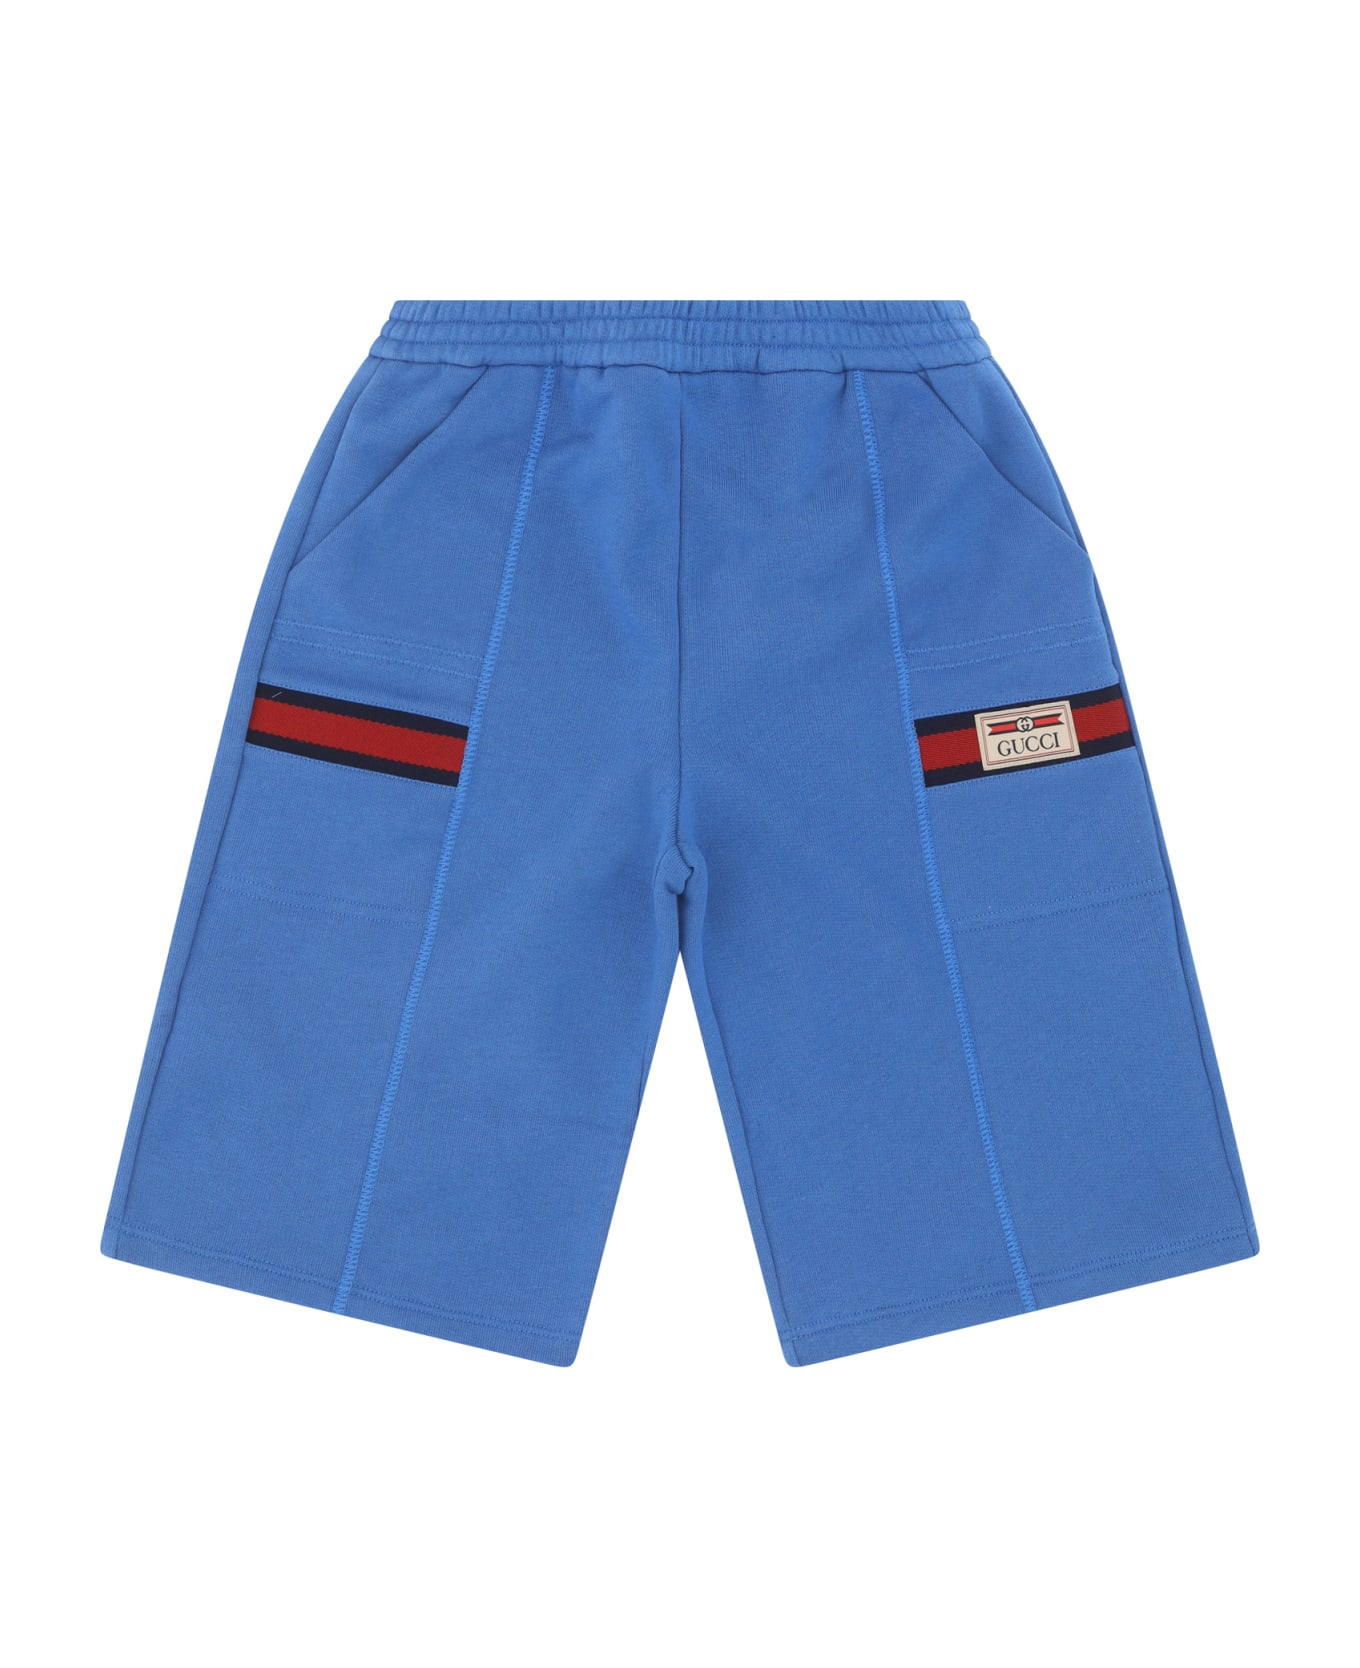 Gucci Shorts For Boy - LIGHT BLUE